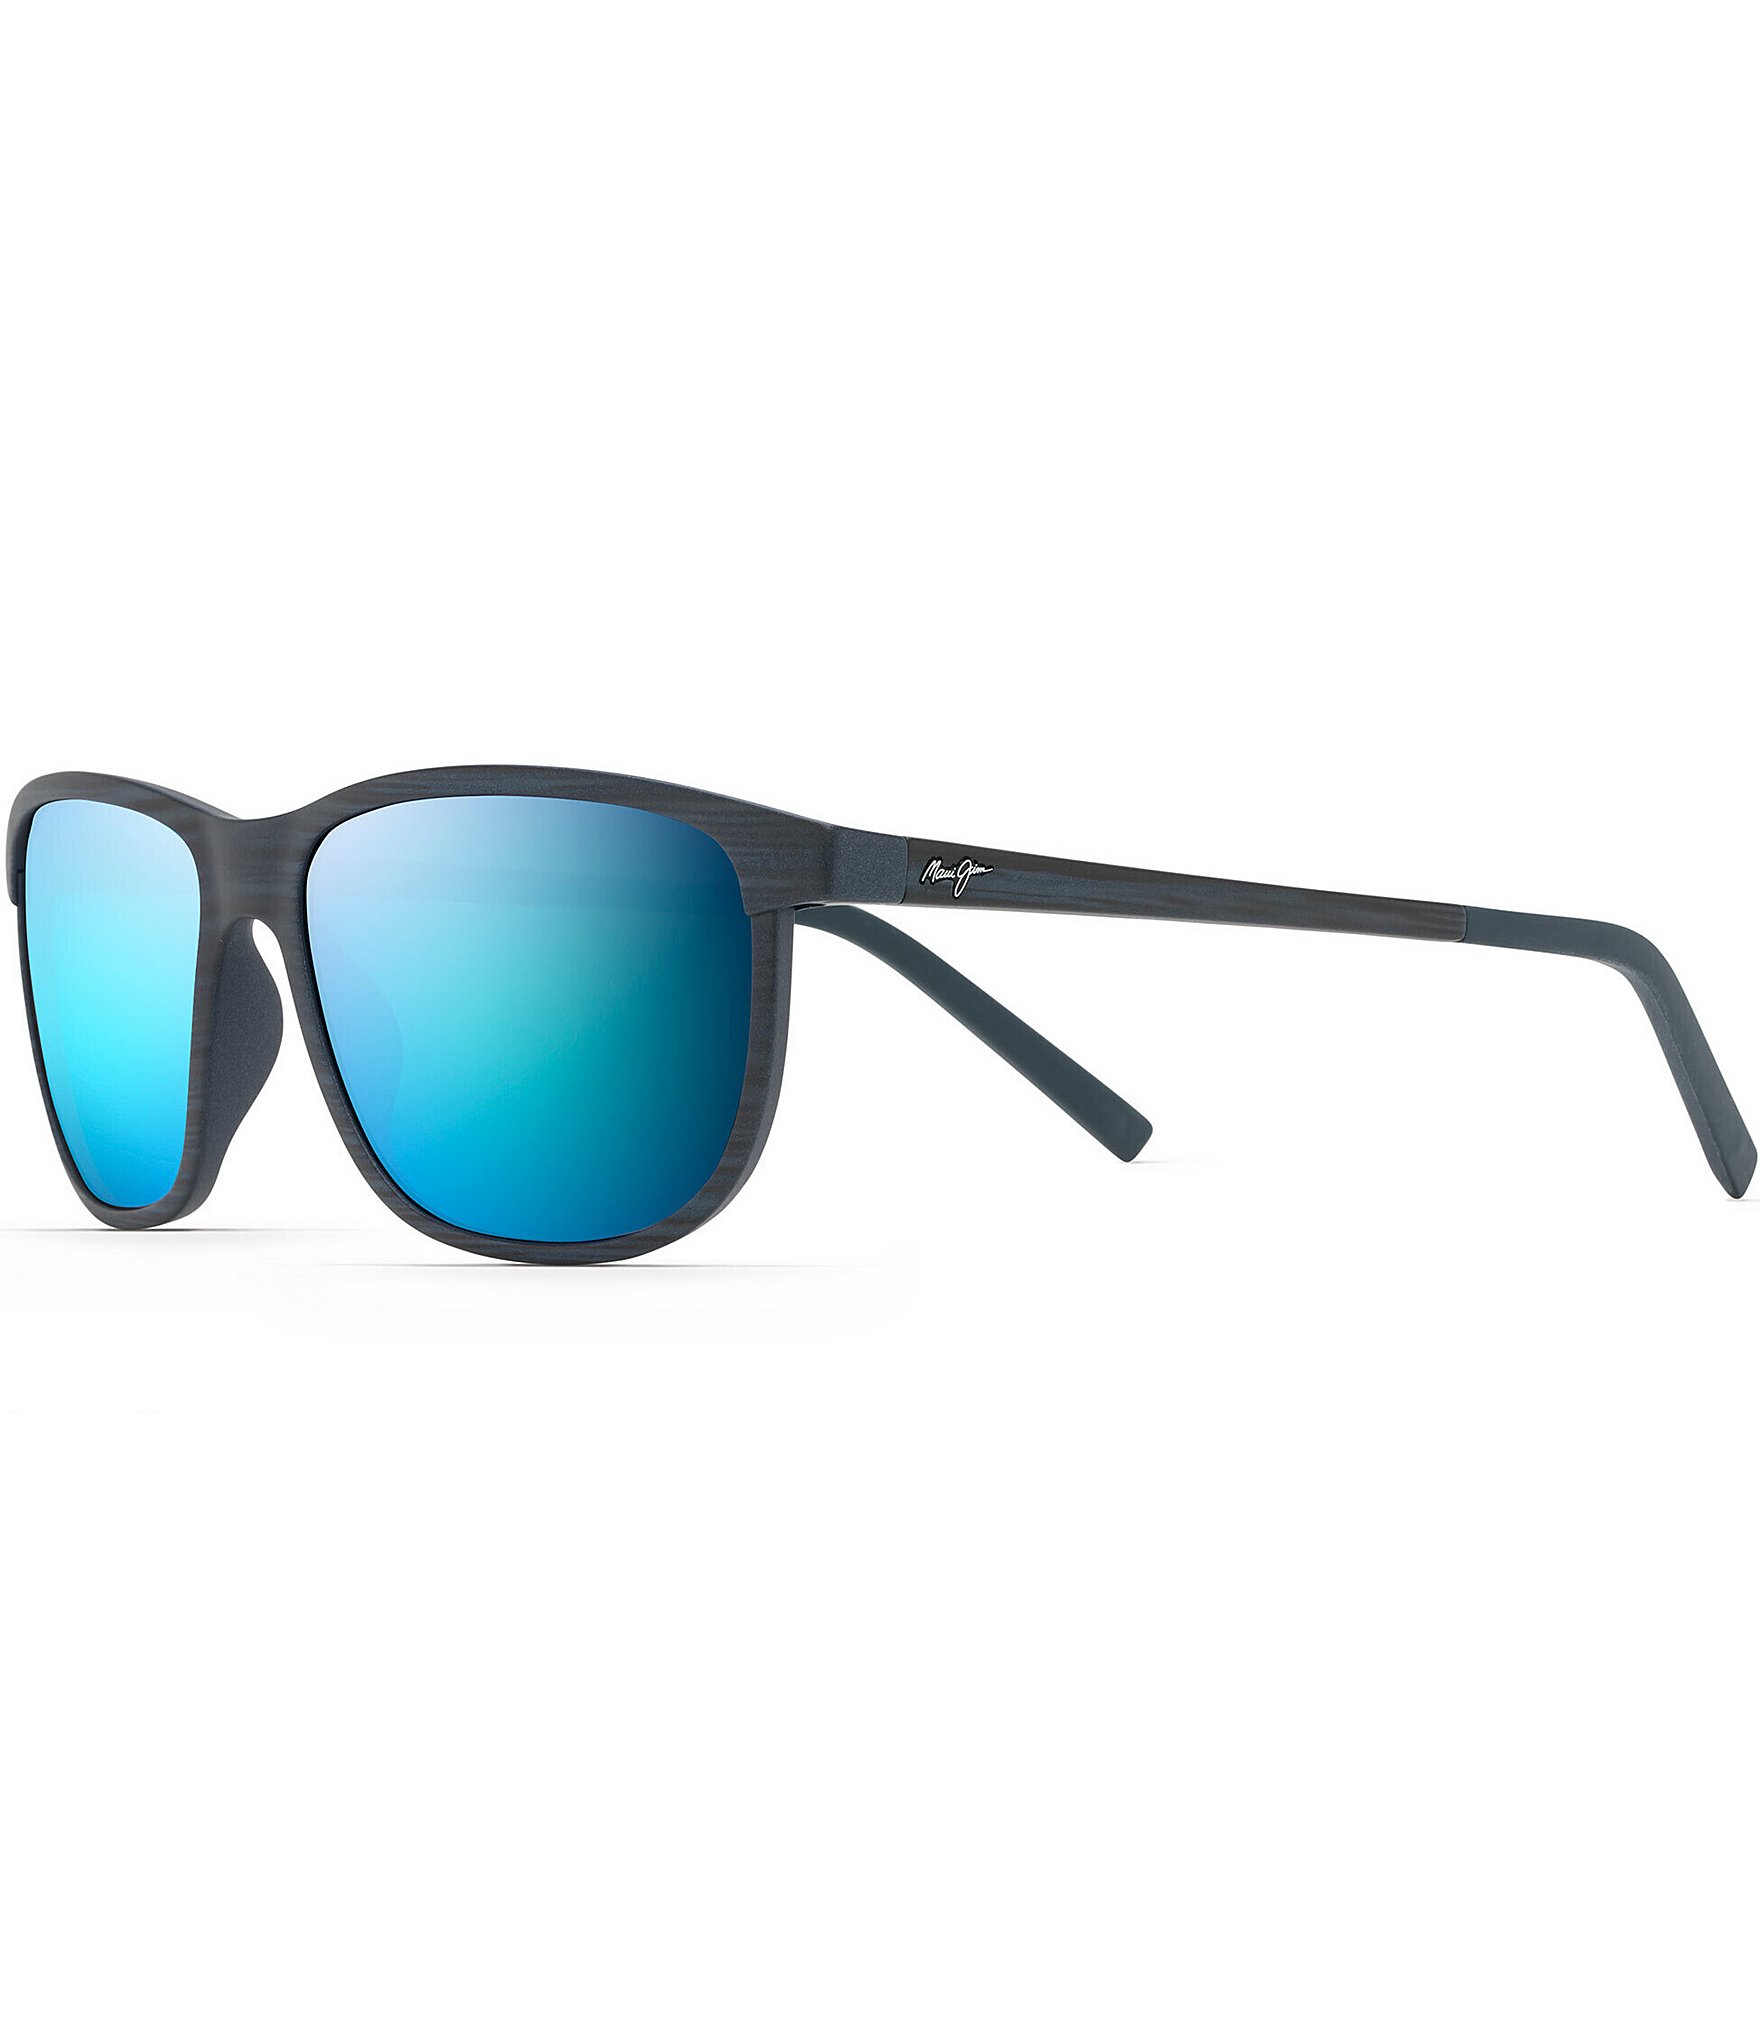 navy: Sunglasses & Eyewear | Dillard's